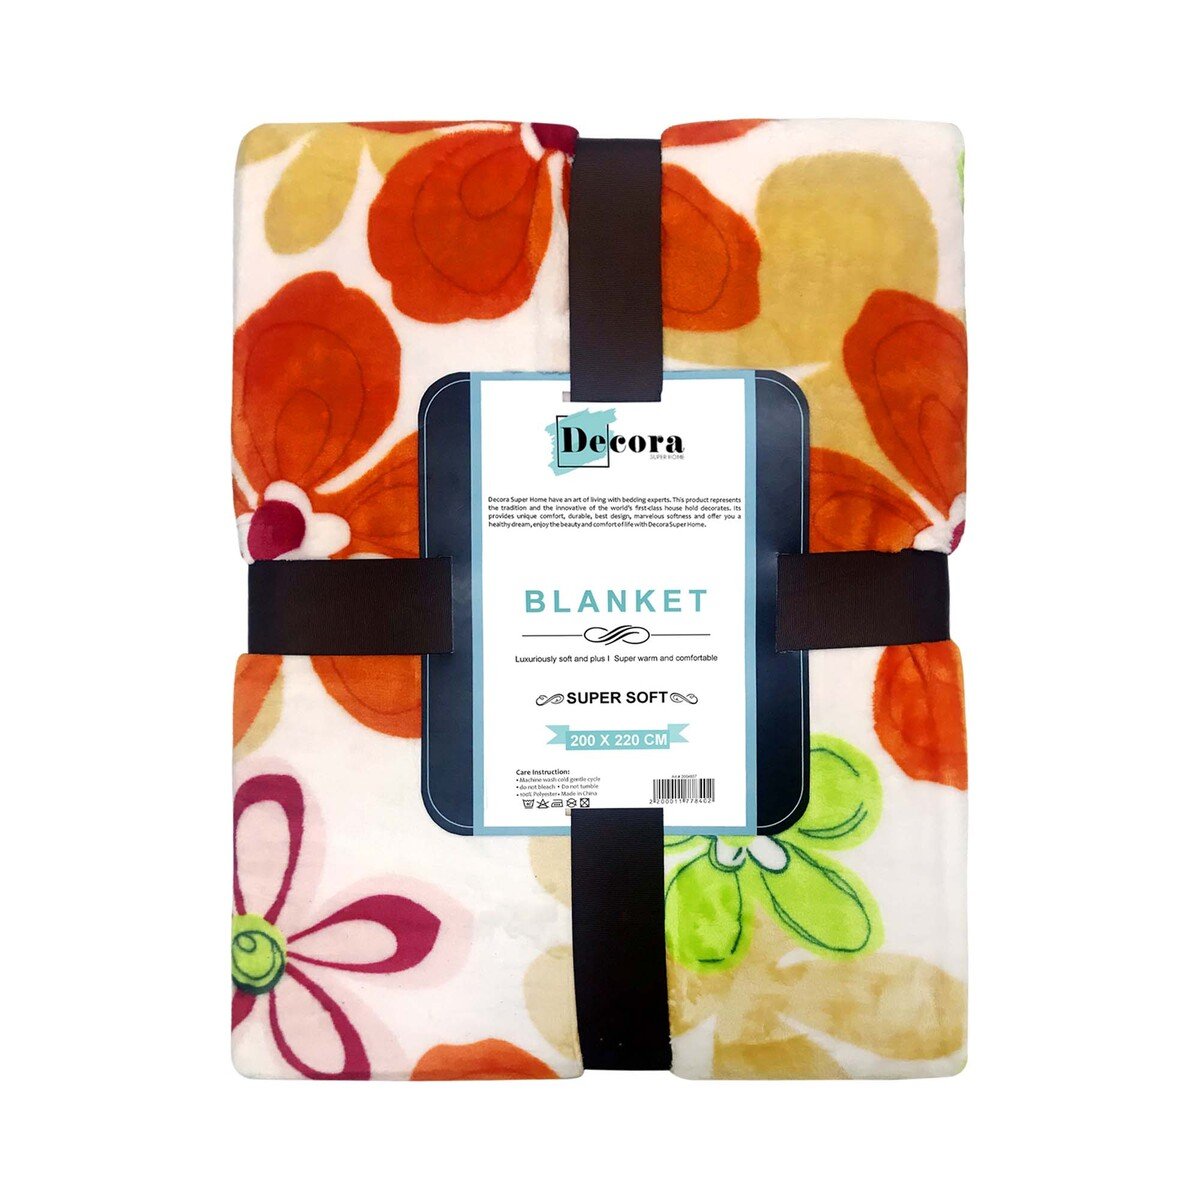 Decora Super Soft Flannel Blanket 200x220cm Assorted Per pc